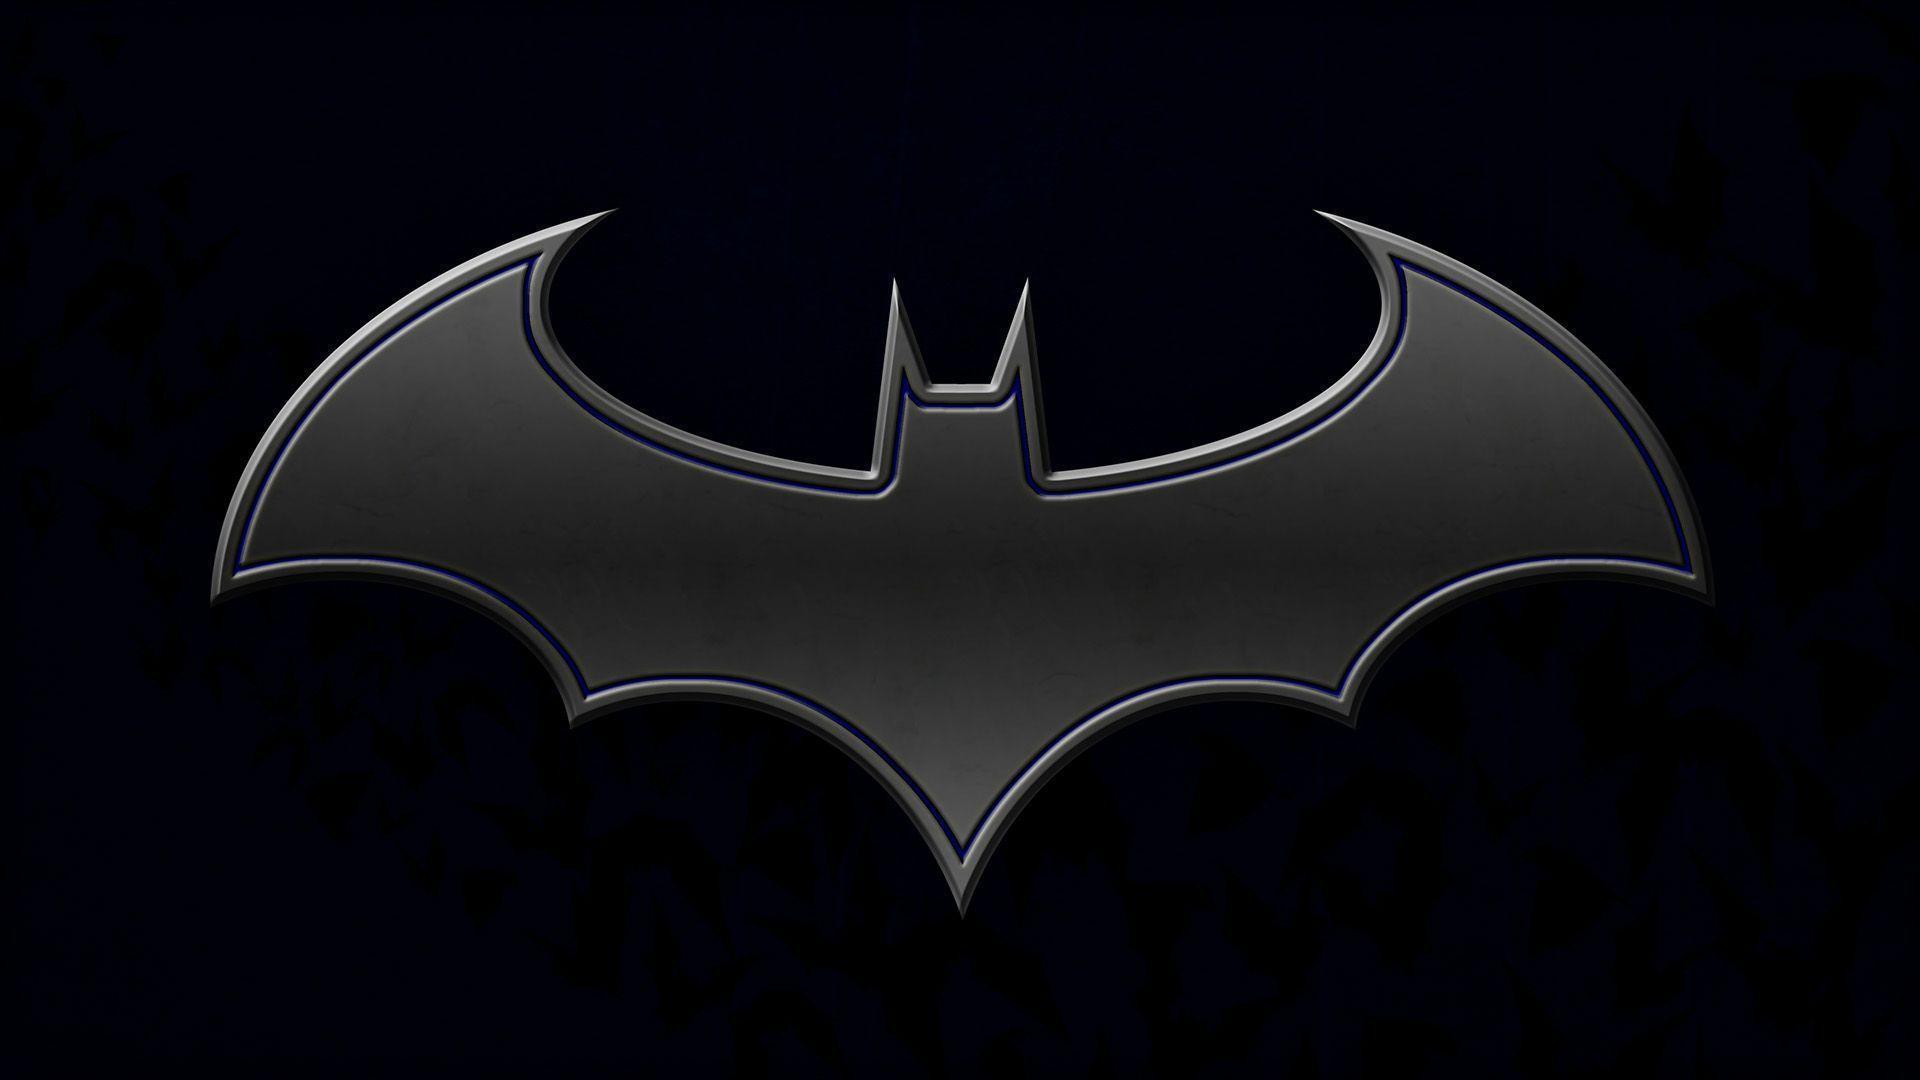 Wallpaper For > Awesome Batman Symbol Wallpaper